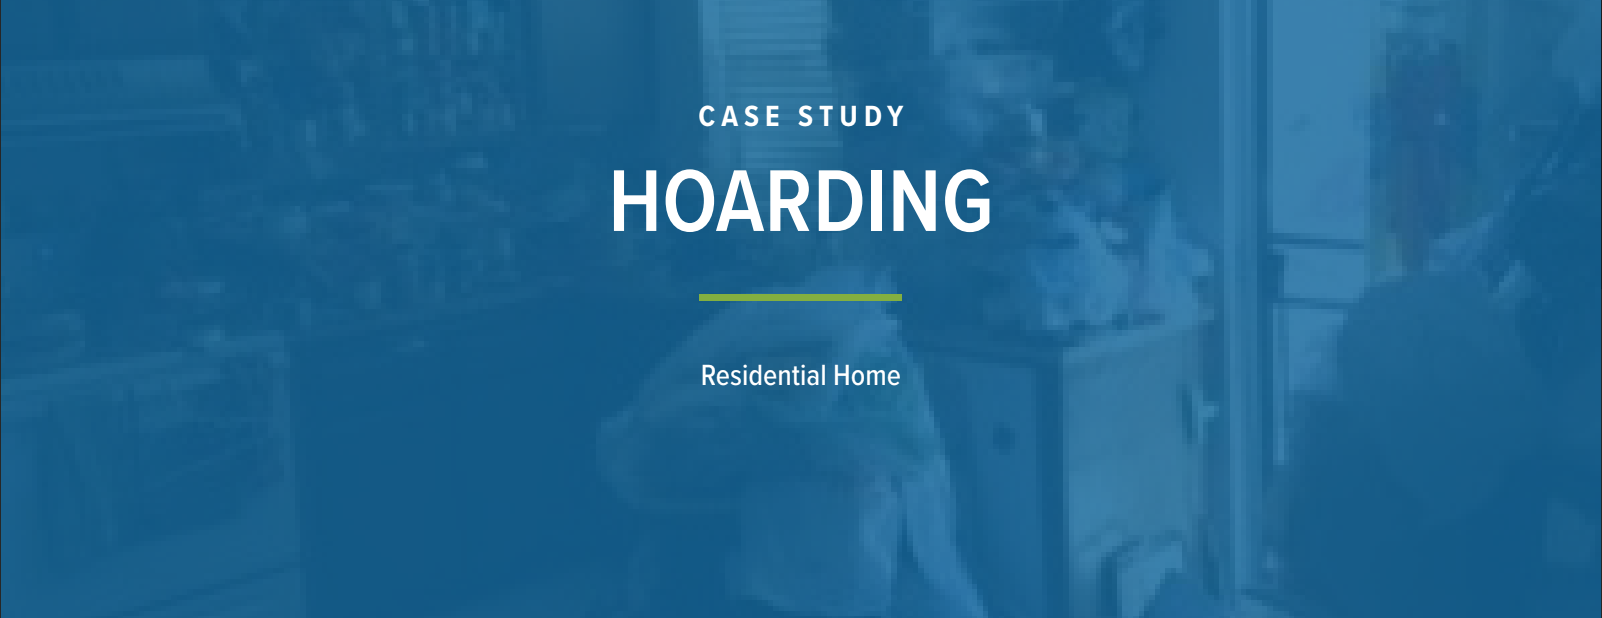 Case study: residential home hoarding